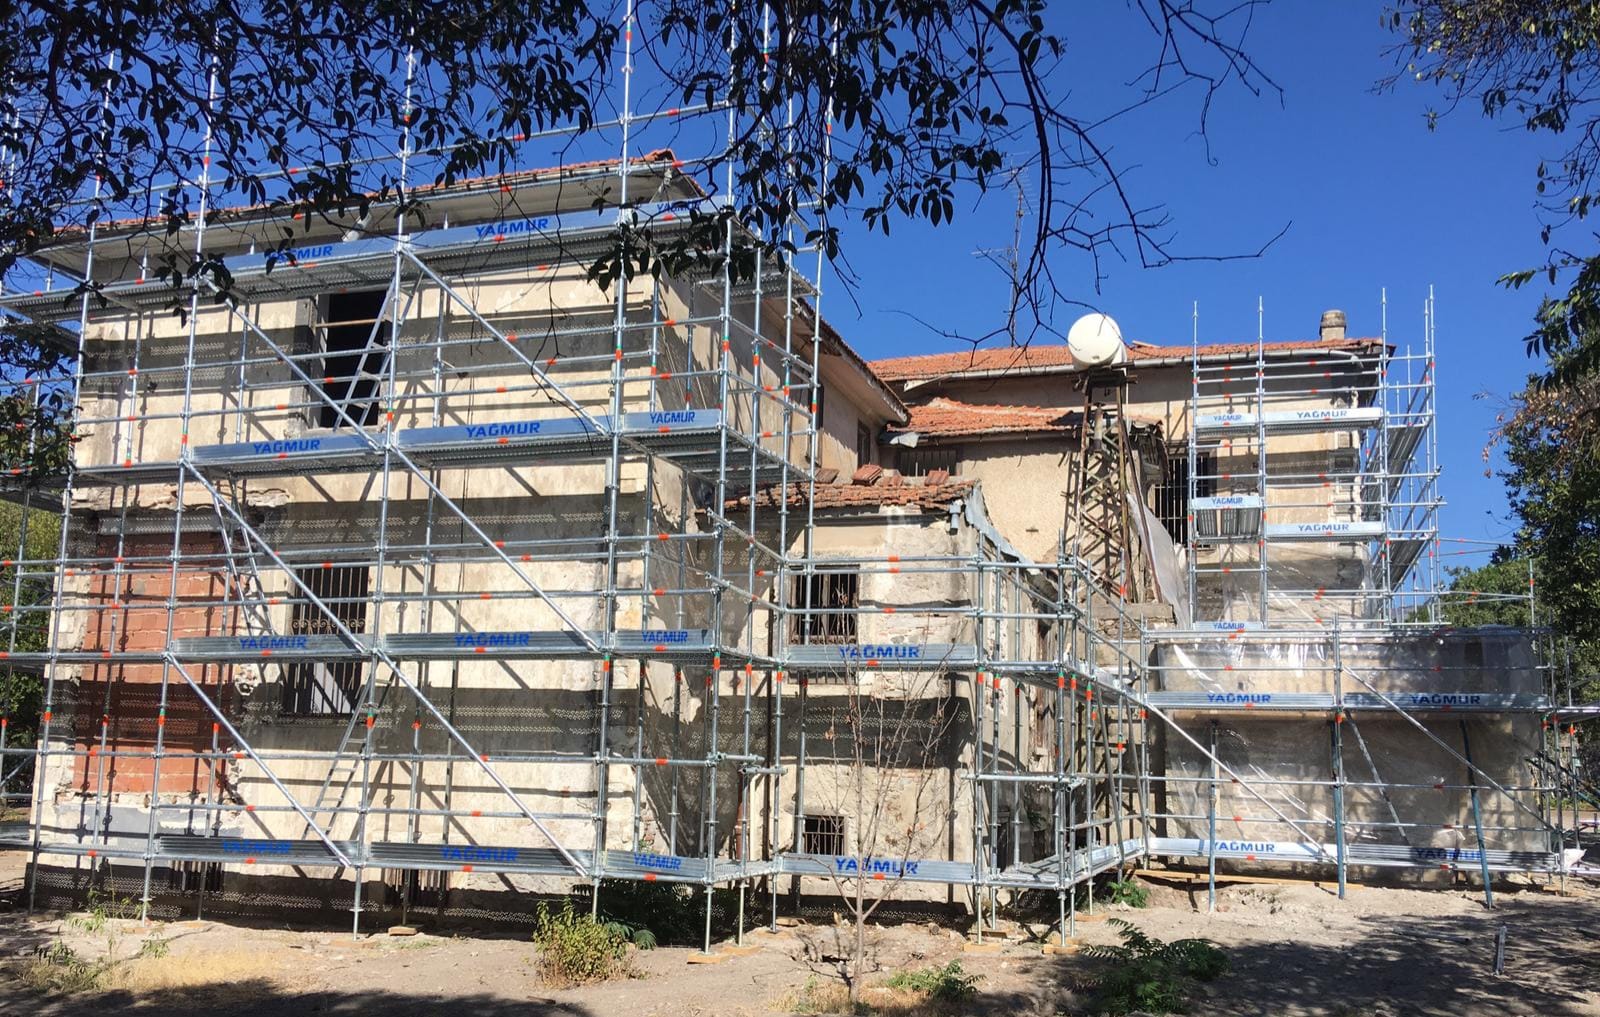 yagmur scaffolding building07 - CONSTRUCTION